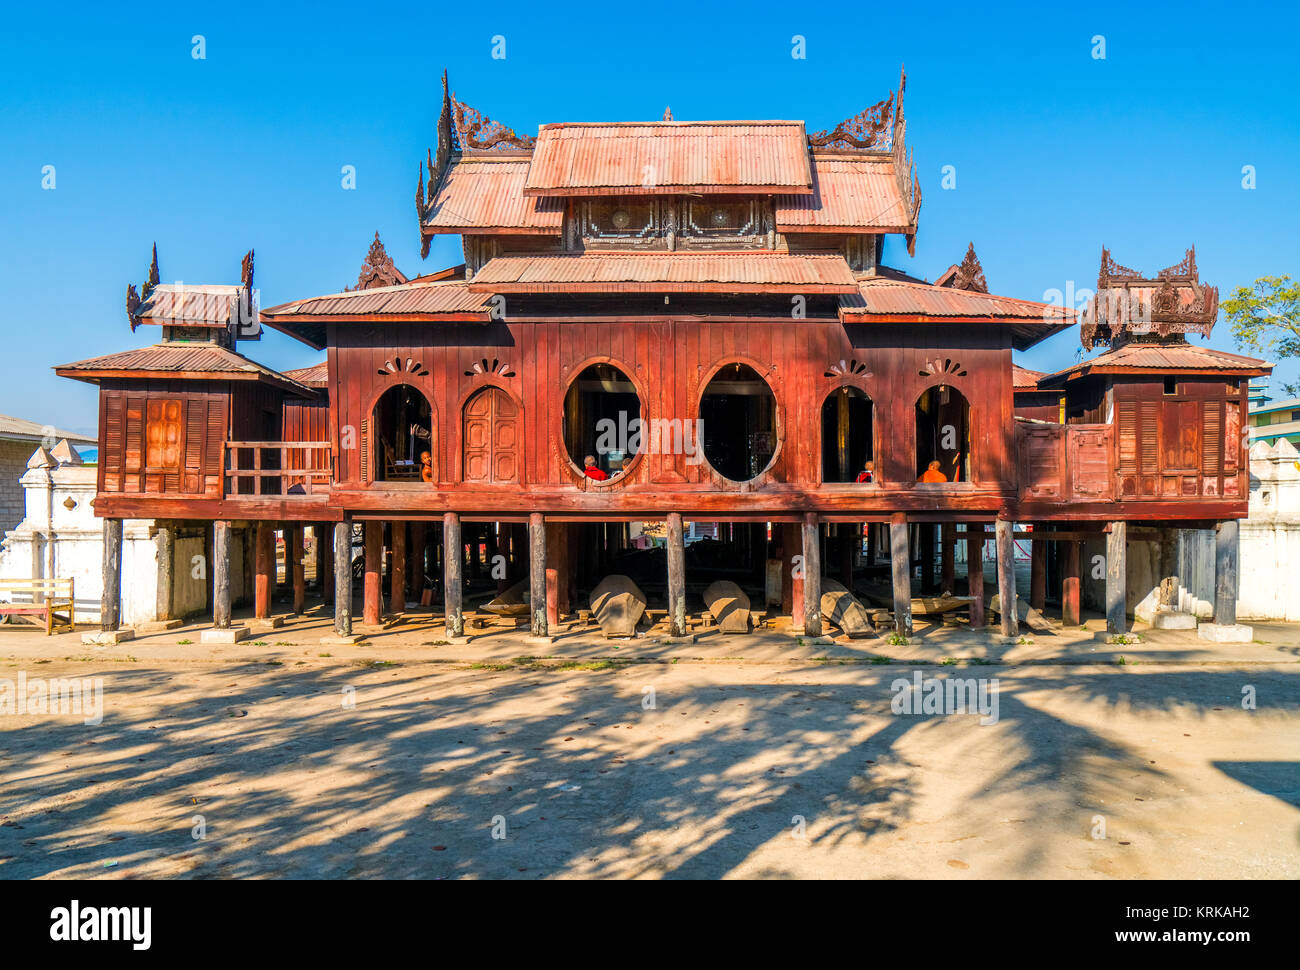 Alte Teakholz Kloster Shwe Yan Pyay in Nyaung Shwe, Myanmar. Stockfoto